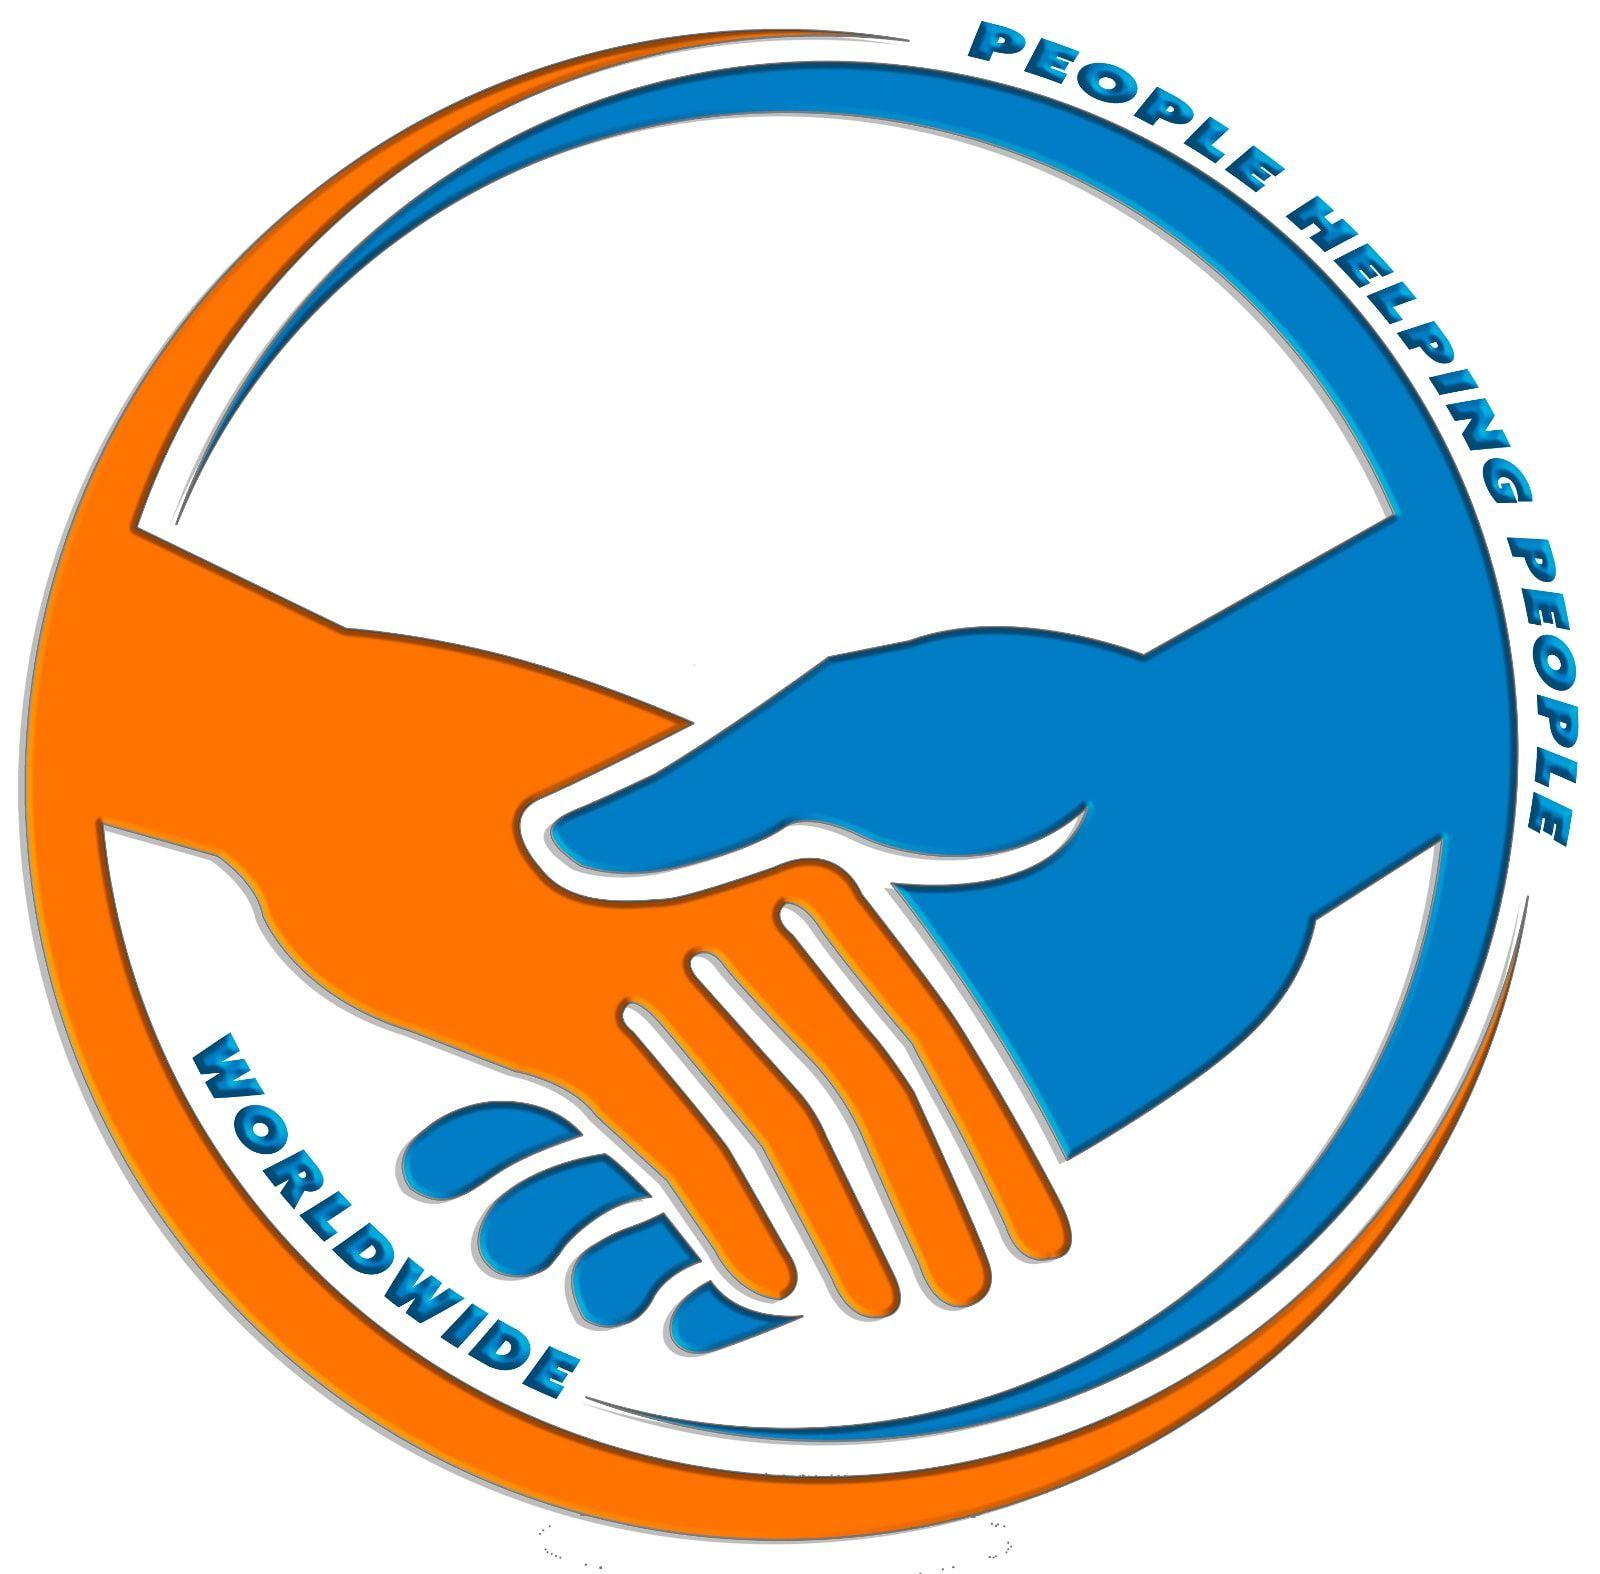 People Helping People Logo - Compensation Plan | People Helping People Worldwide